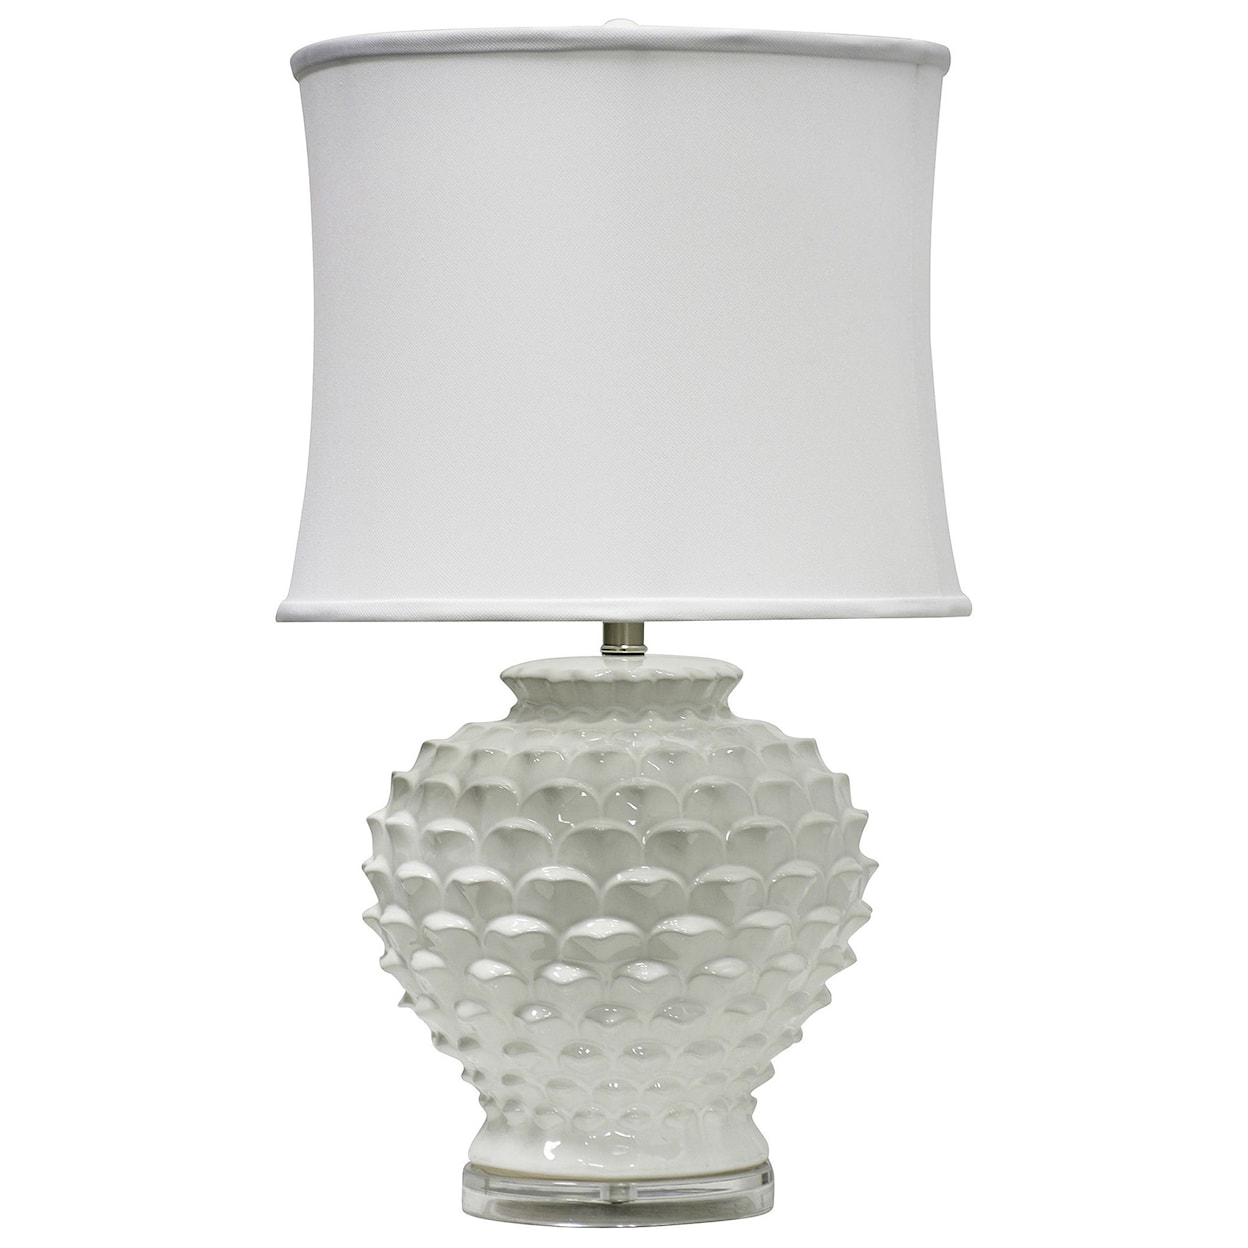 StyleCraft Lamps White Ceramic Table Lamp